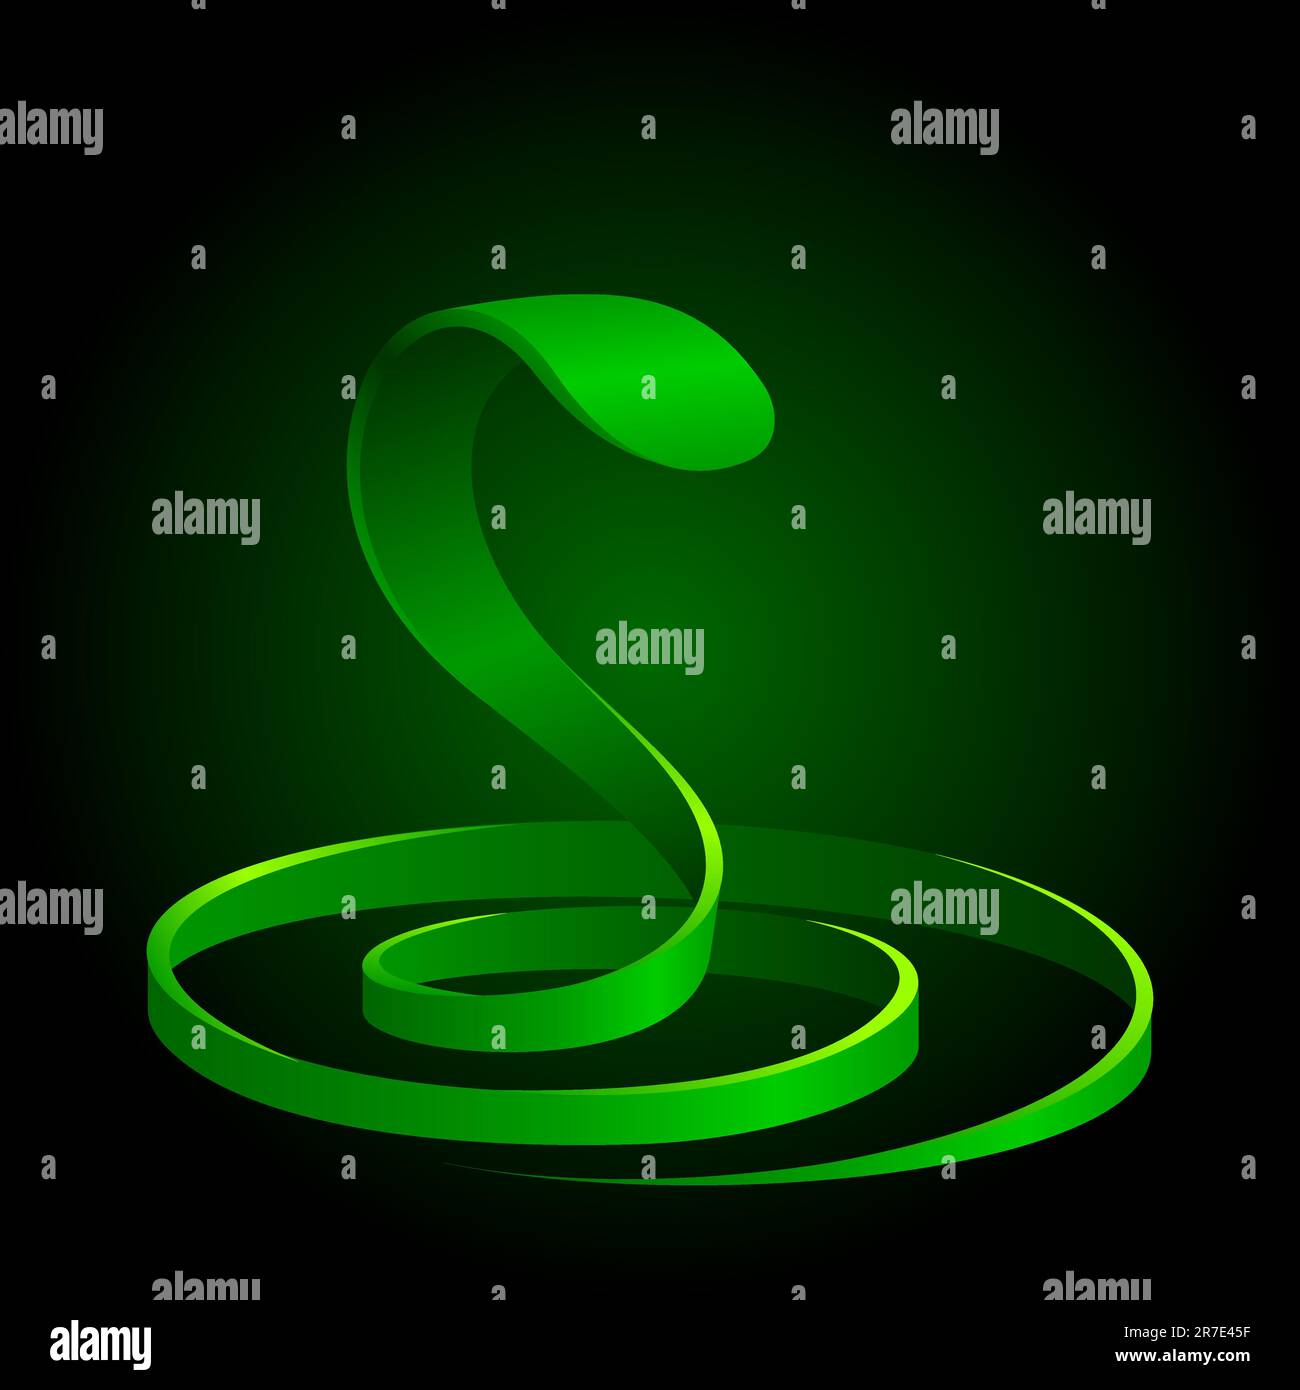 simplistic snake vector graphics Stock Vector